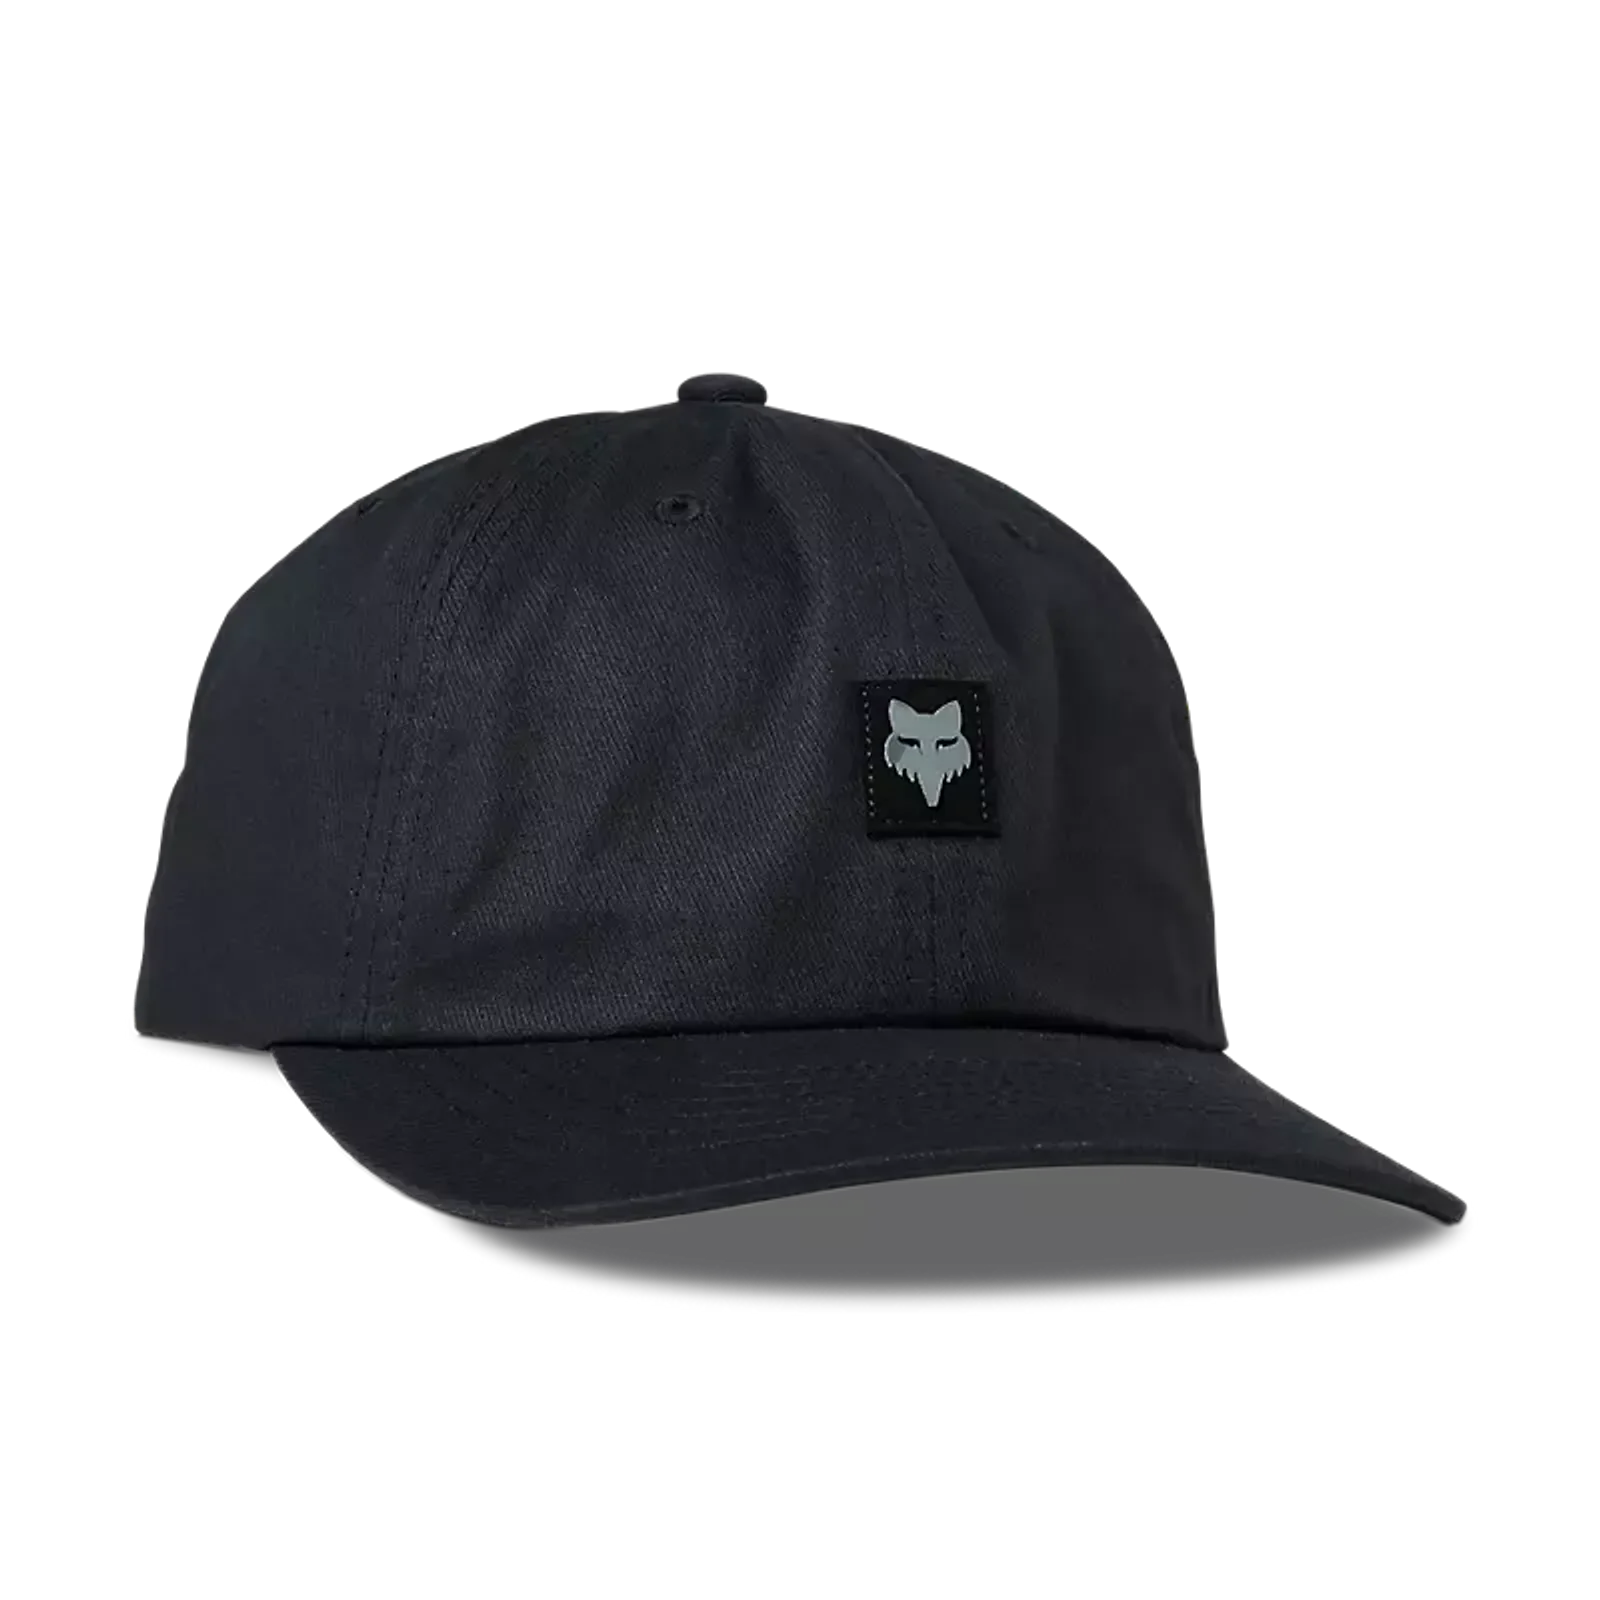 Factory Effex Yamaha Vector Black/Gray Mens Snapback Hats